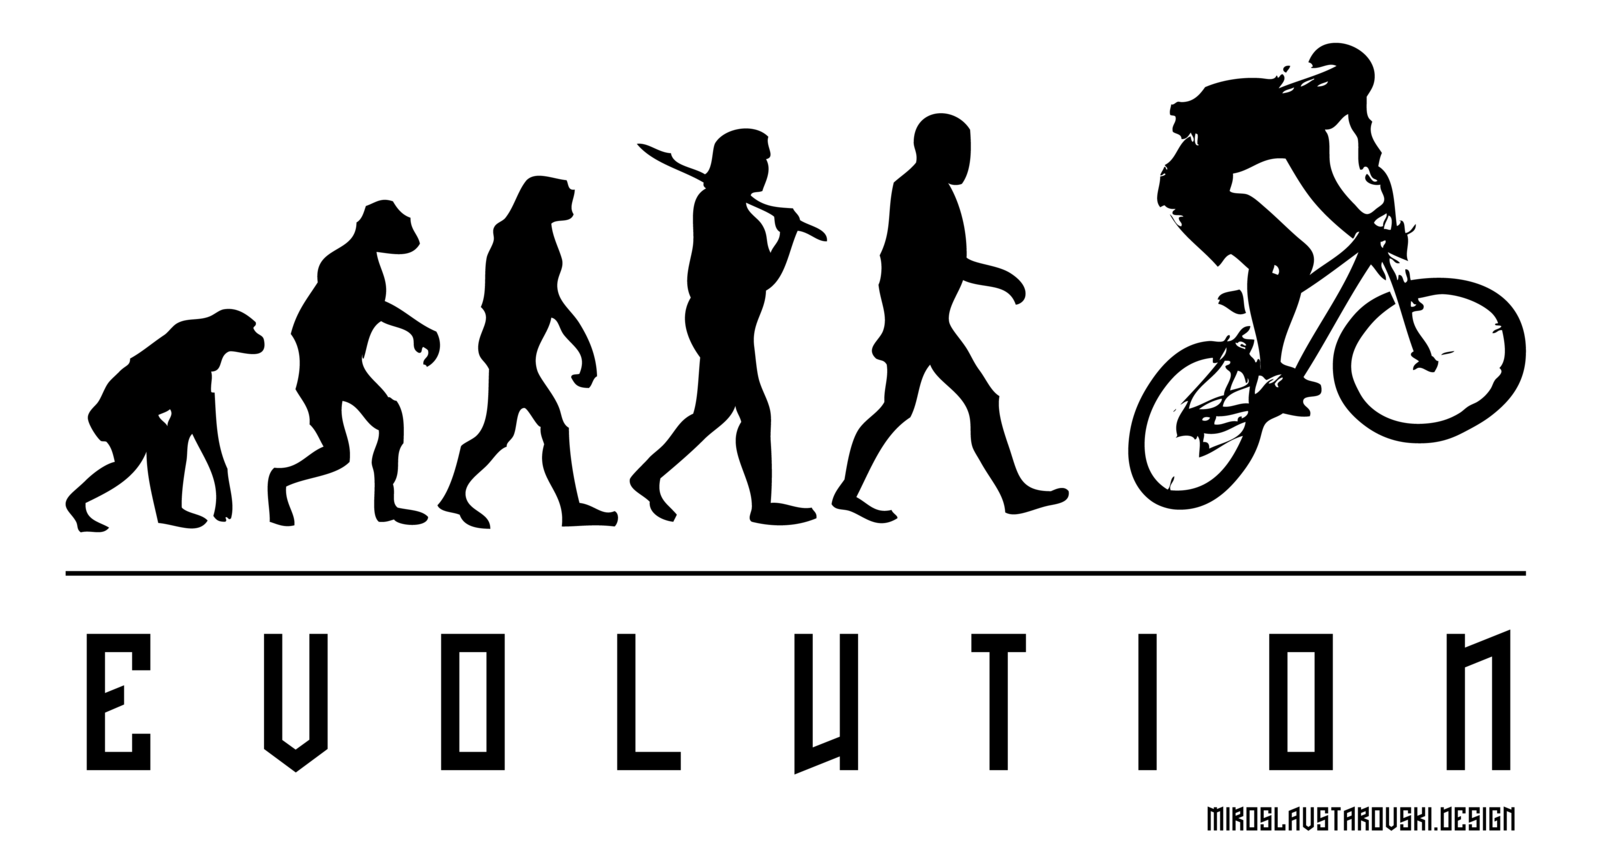 Evolution #6